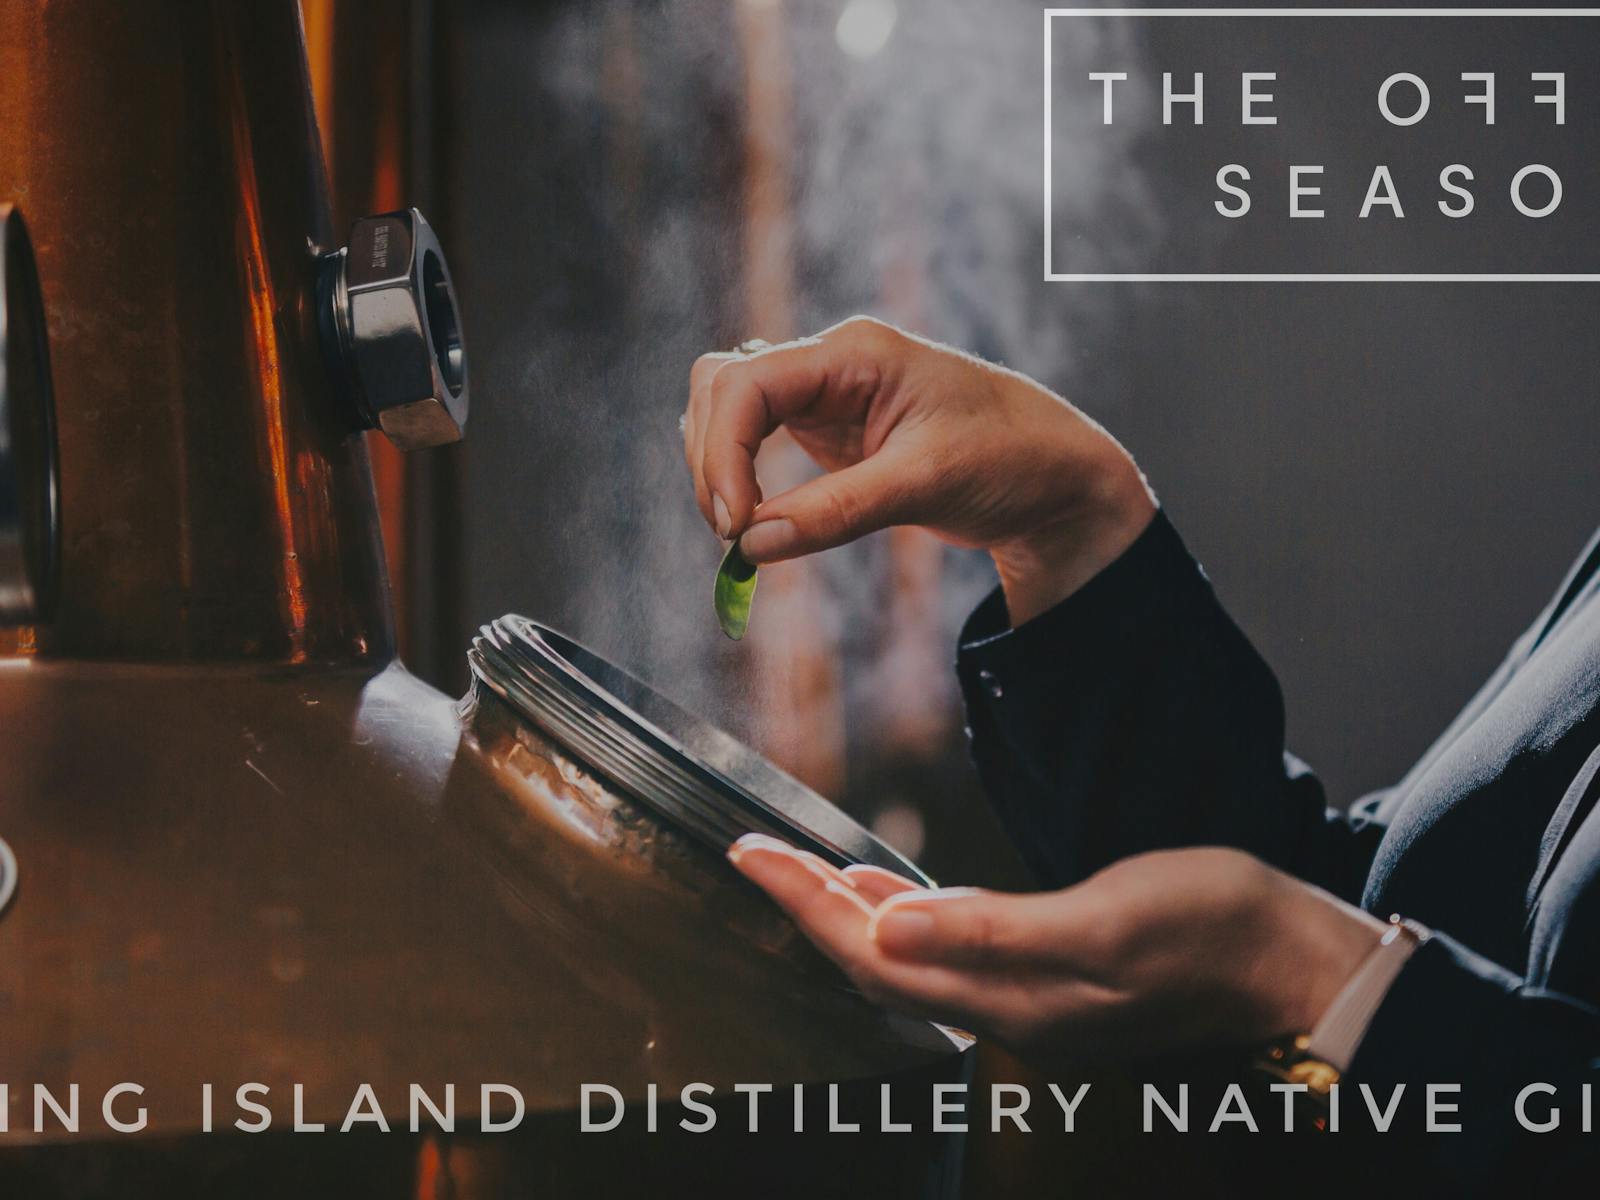 king-island-distillery-native-gin-the-off-season